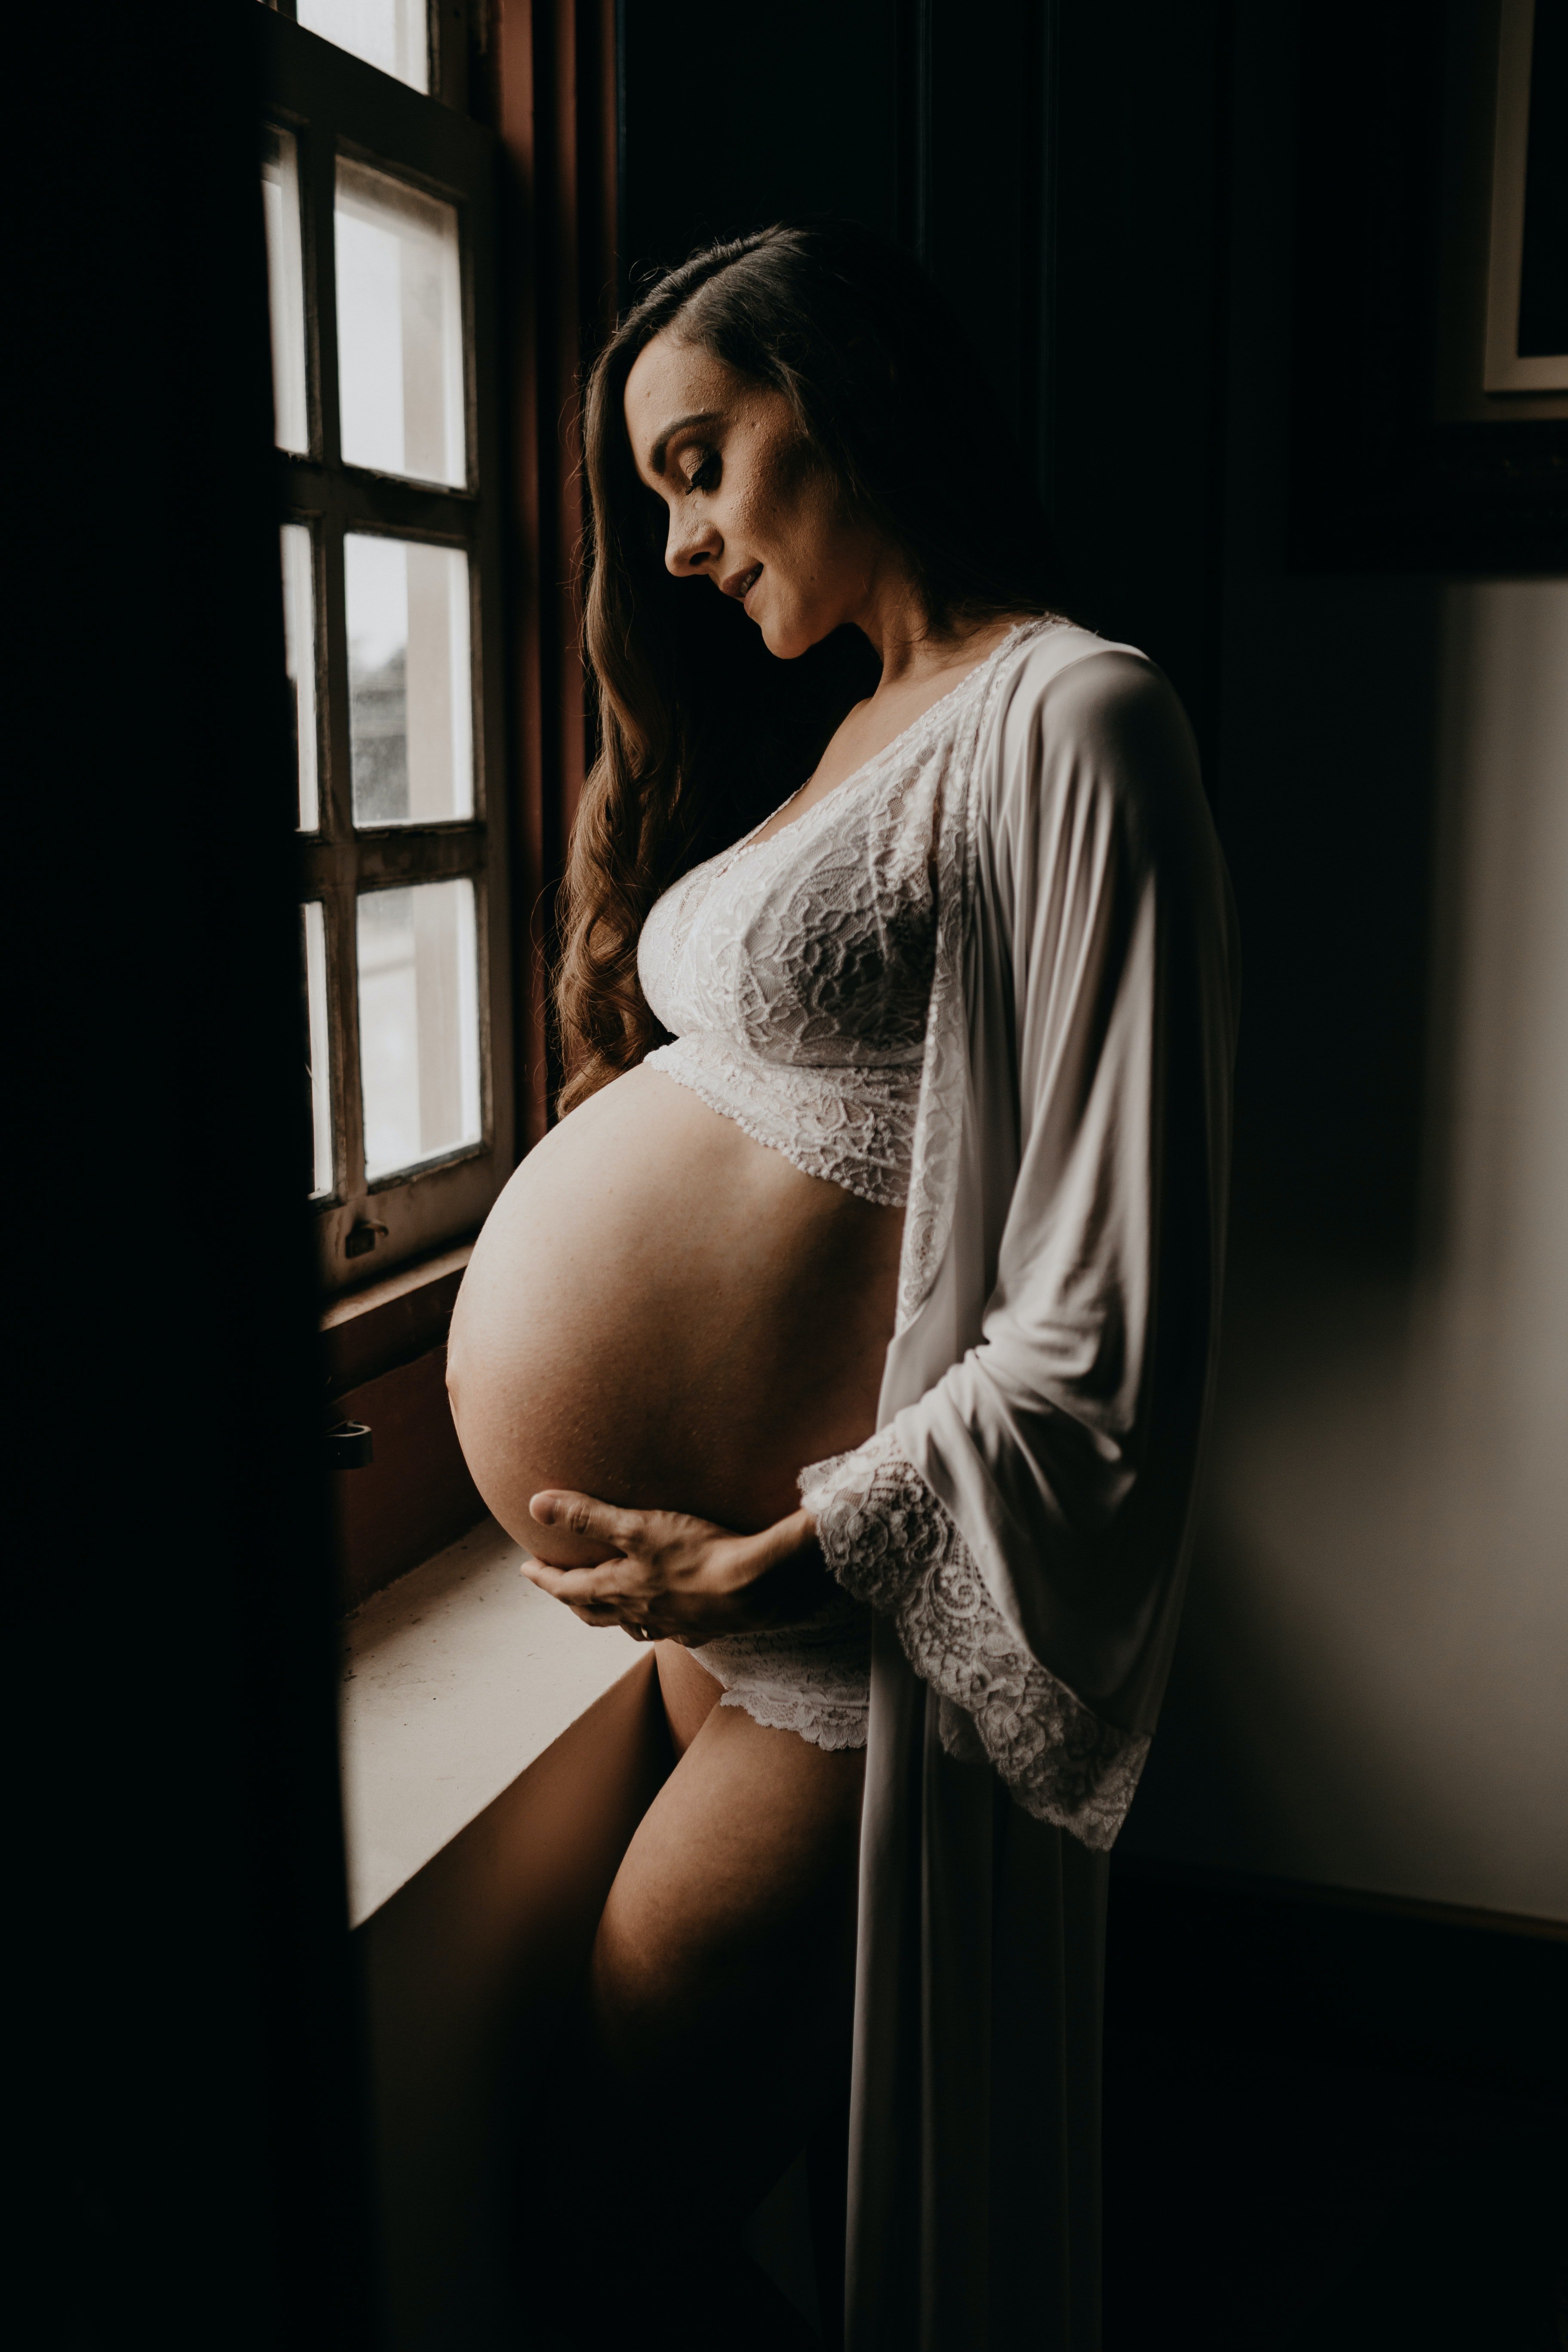 Pregnant woman wearing a cardigan beside window. | Source: Pexels